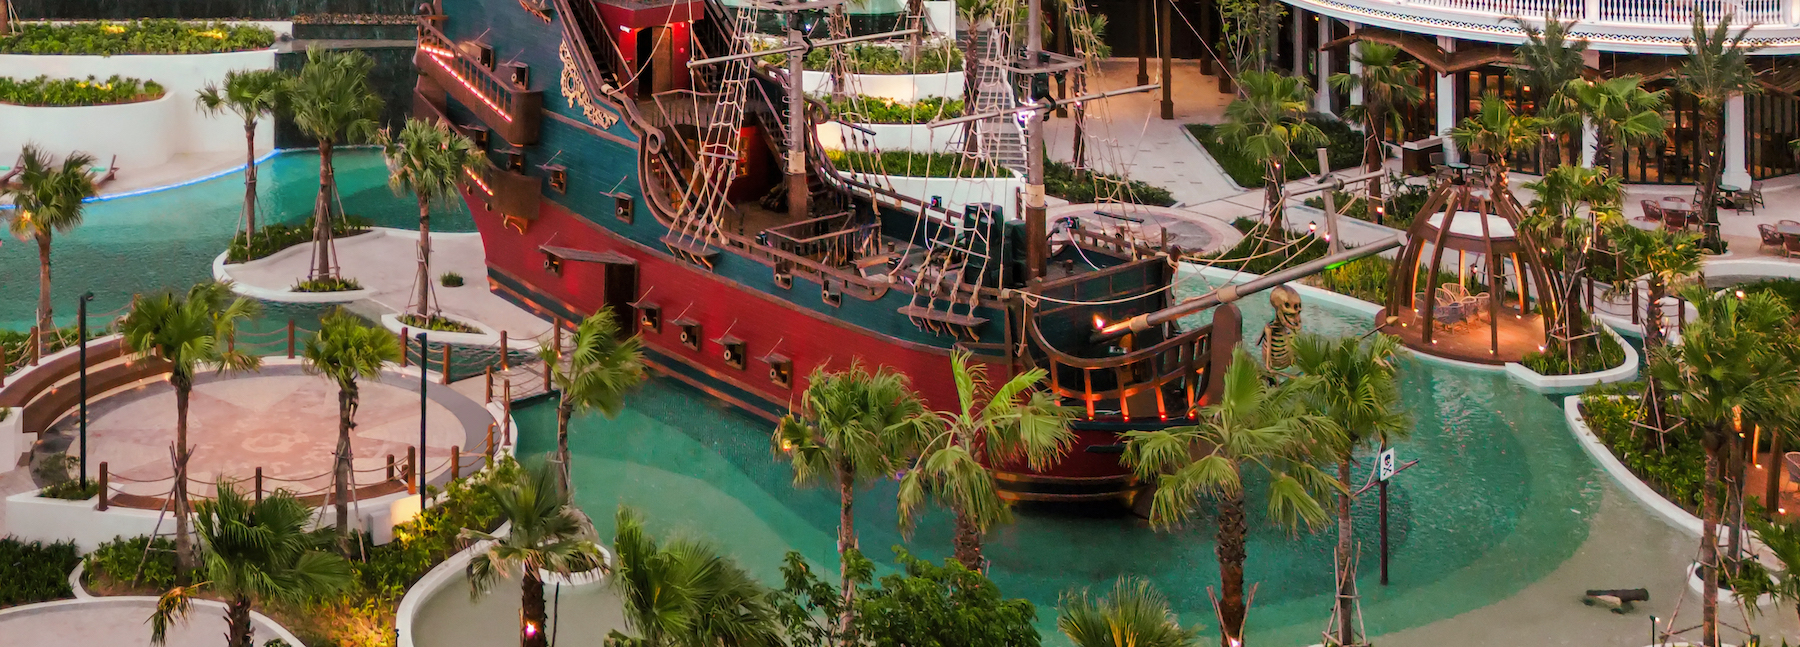 pirate theme resort